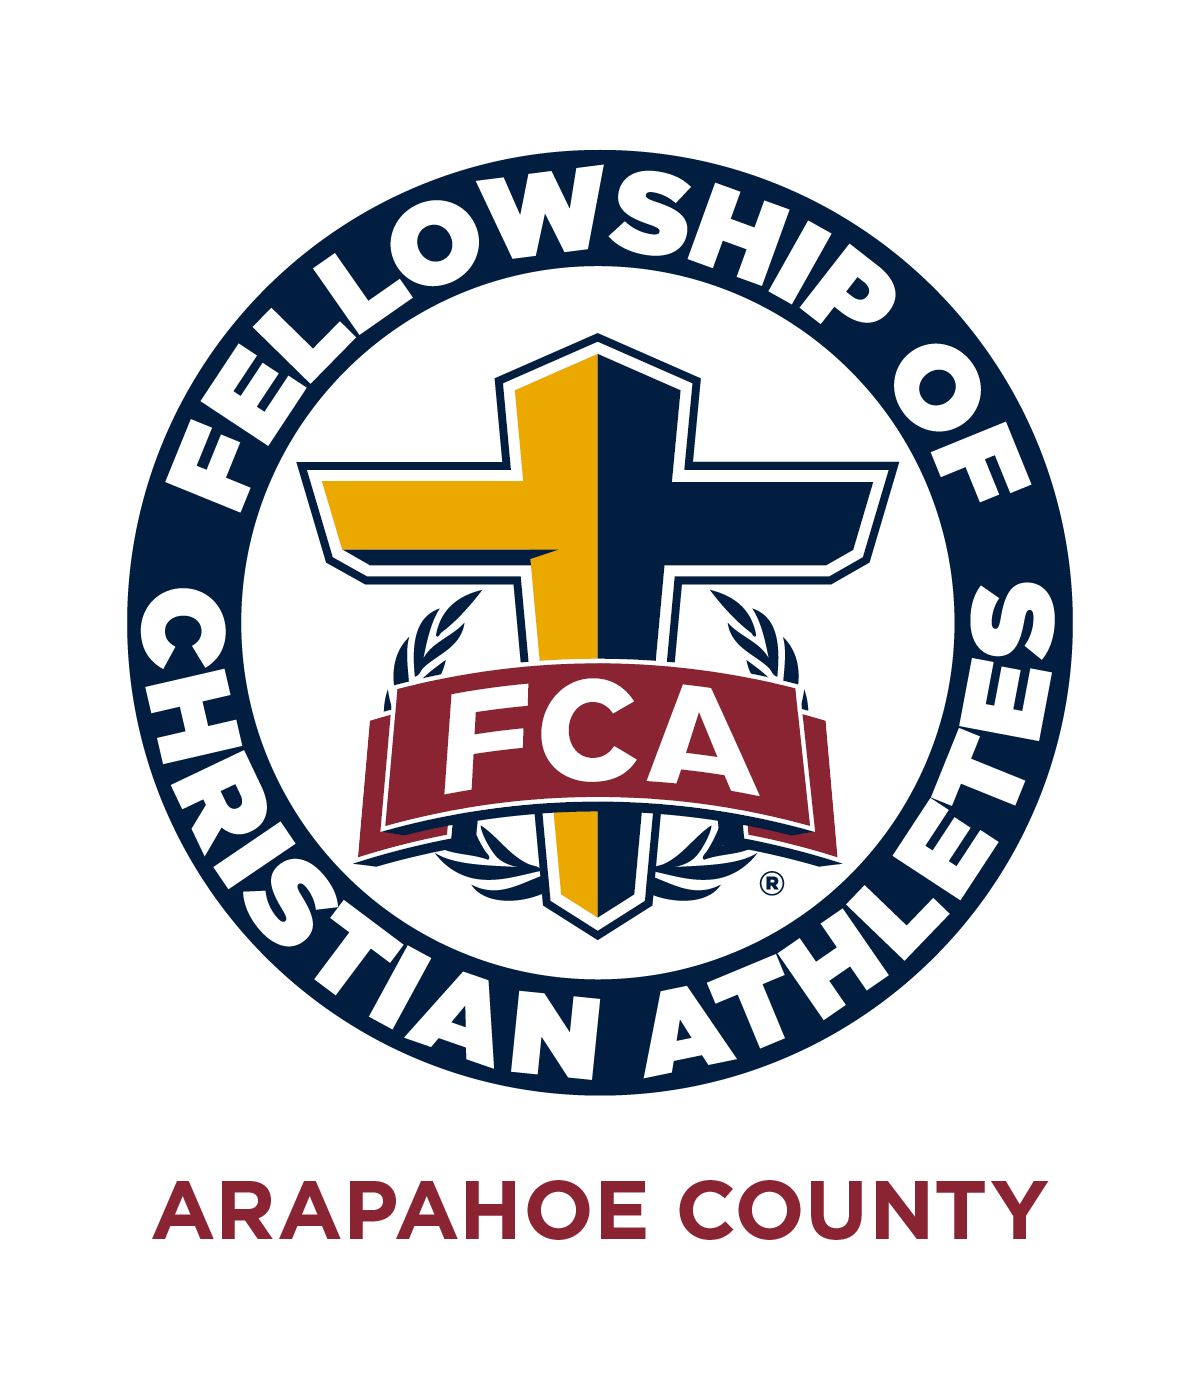 Arapahoe County FCA